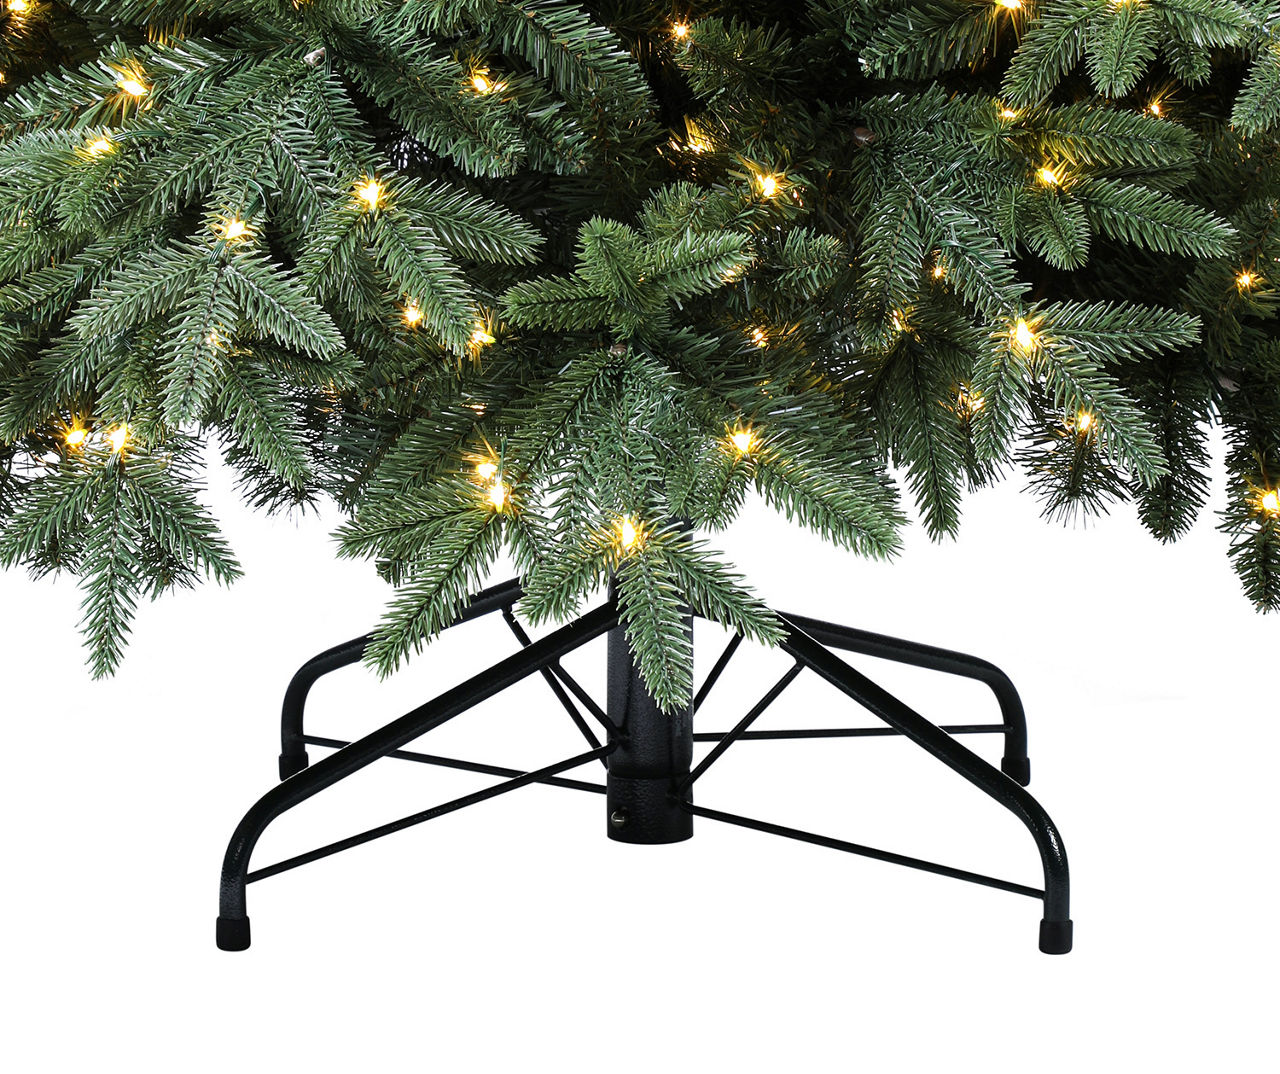 Broyhill 7.5' Deer Valley Pre-Lit LED Artificial Christmas Tree | Big Lots